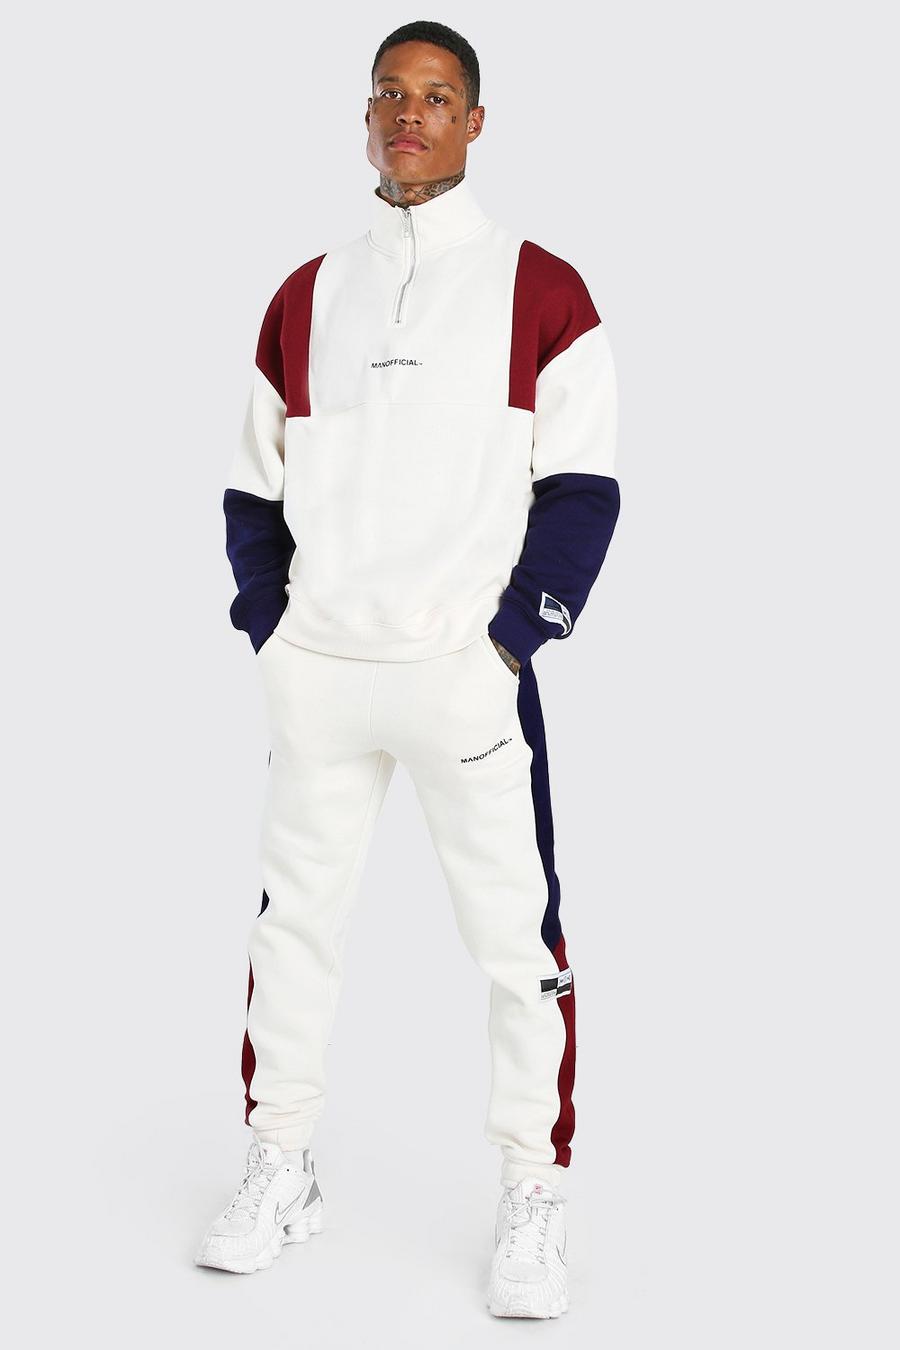 Lockerer Colorblock Trainingsanzug mit Reißverschluss, Naturfarben blanc